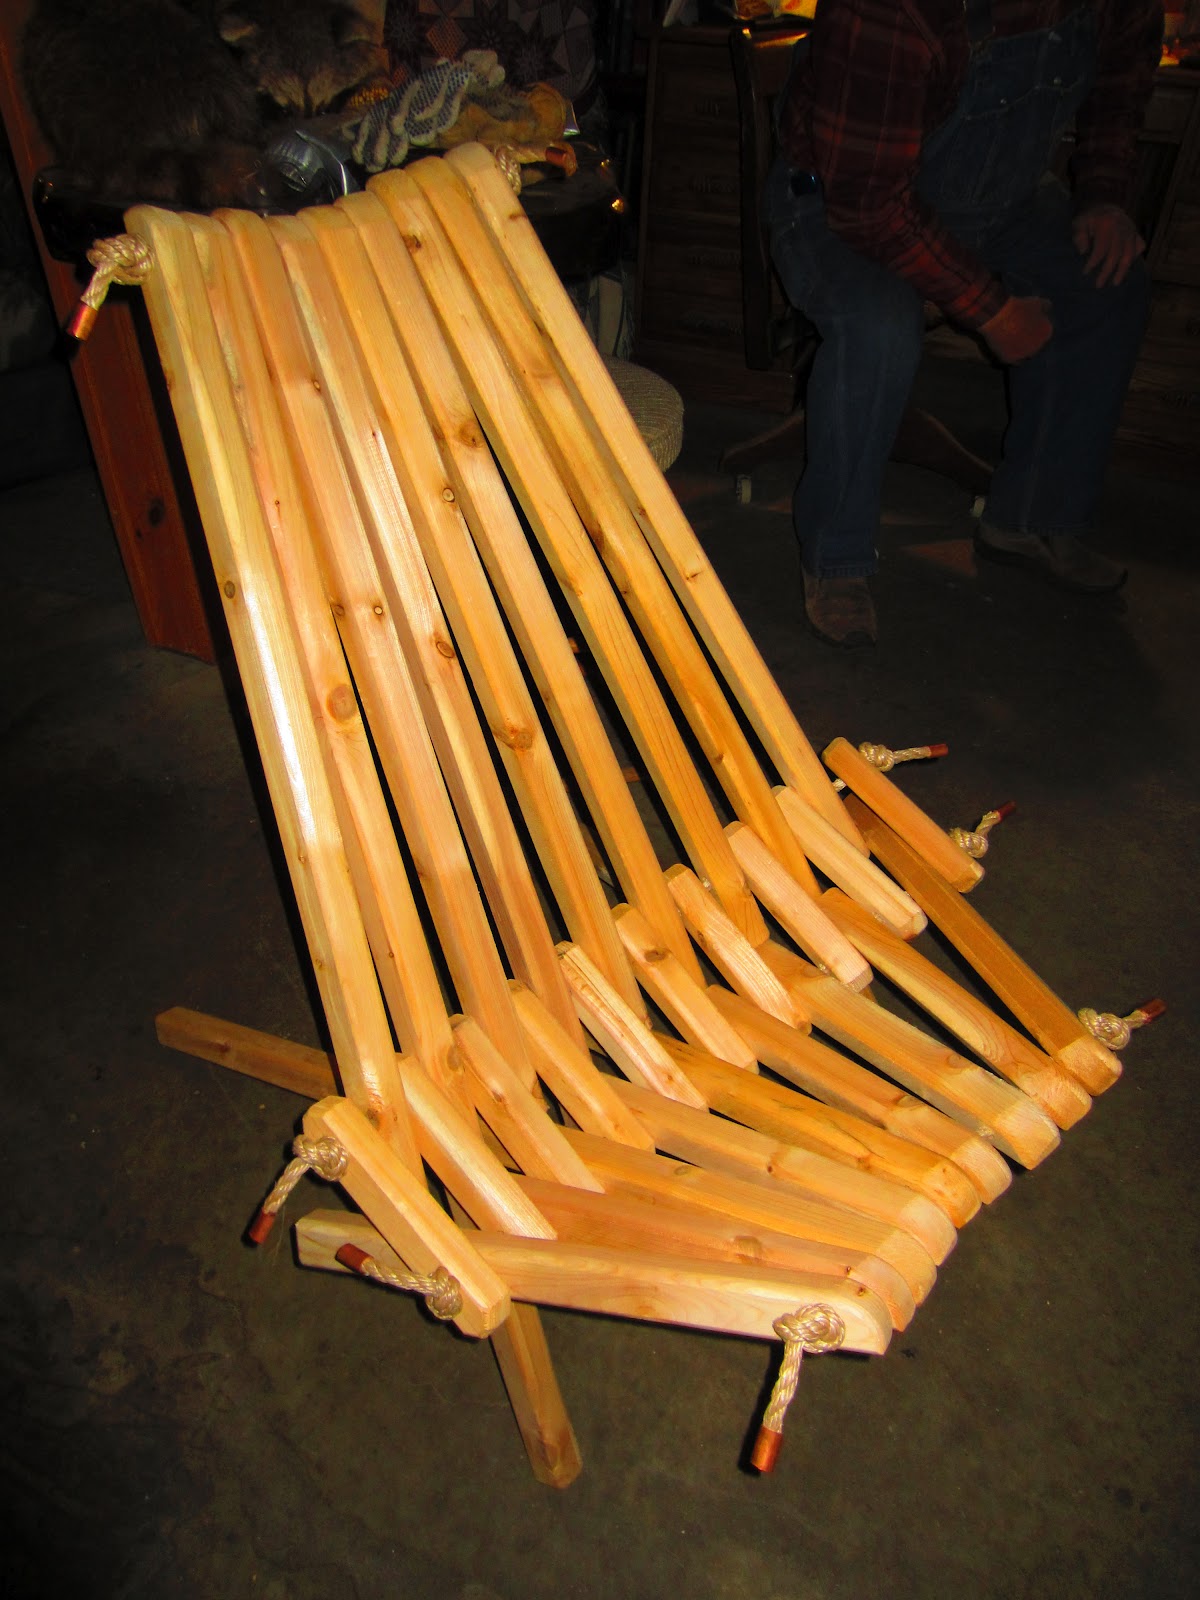 Folding Adirondack Chair Plans